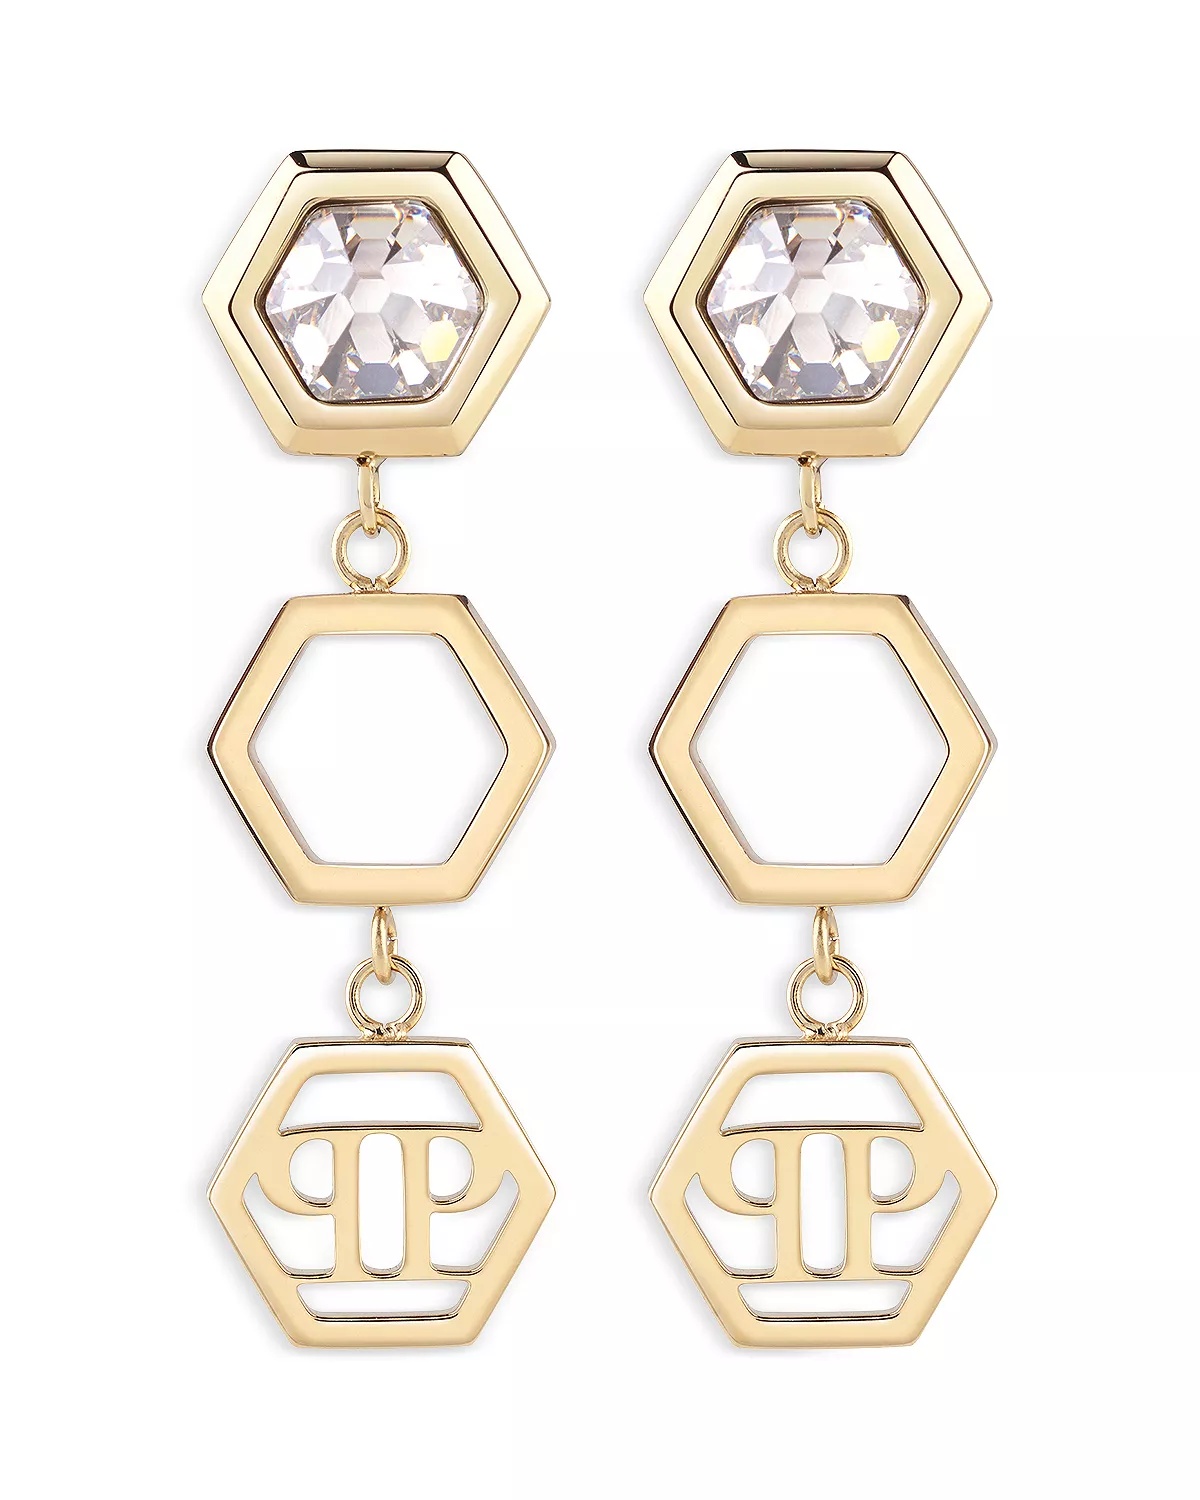 Hexagon Gold Tone Drop Earrings, 1.3"L - 1